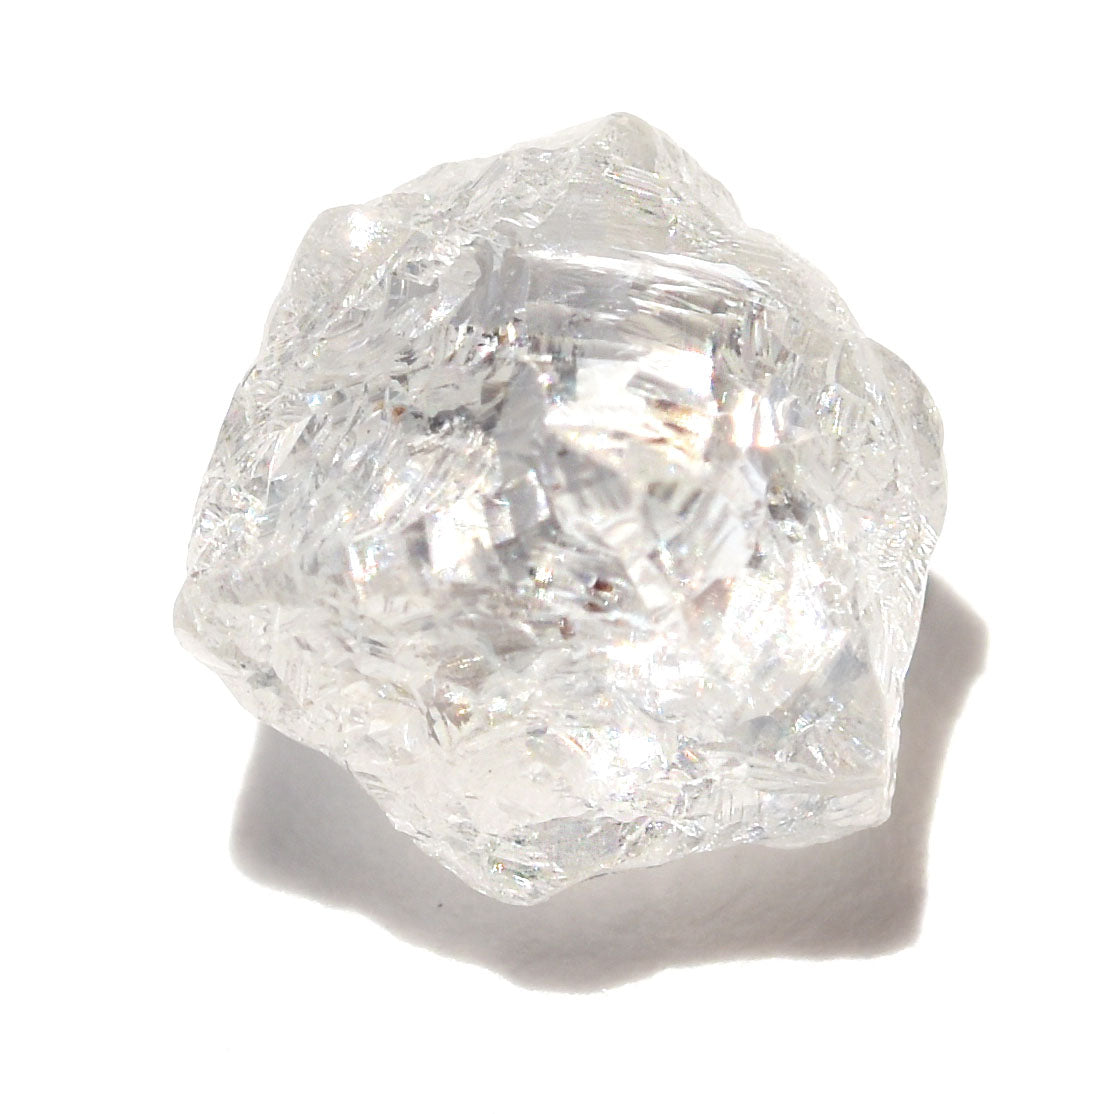 1.26 carat bright star shaped raw diamond – The Raw Stone